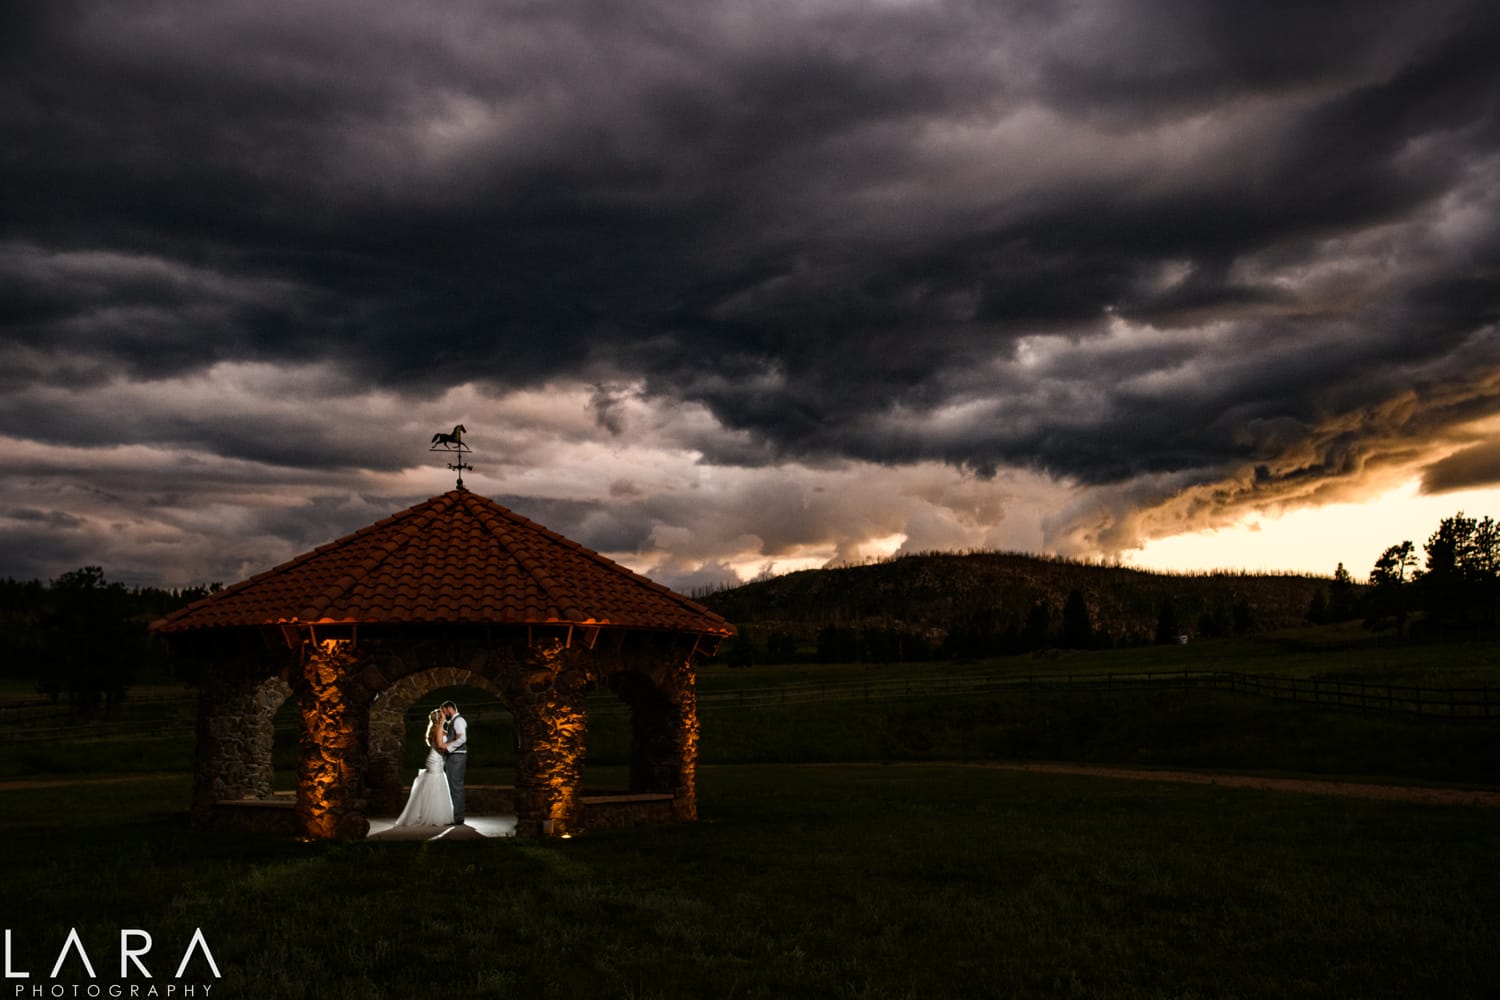 Melinda & Ross – Stove Prairie Ranch Wedding